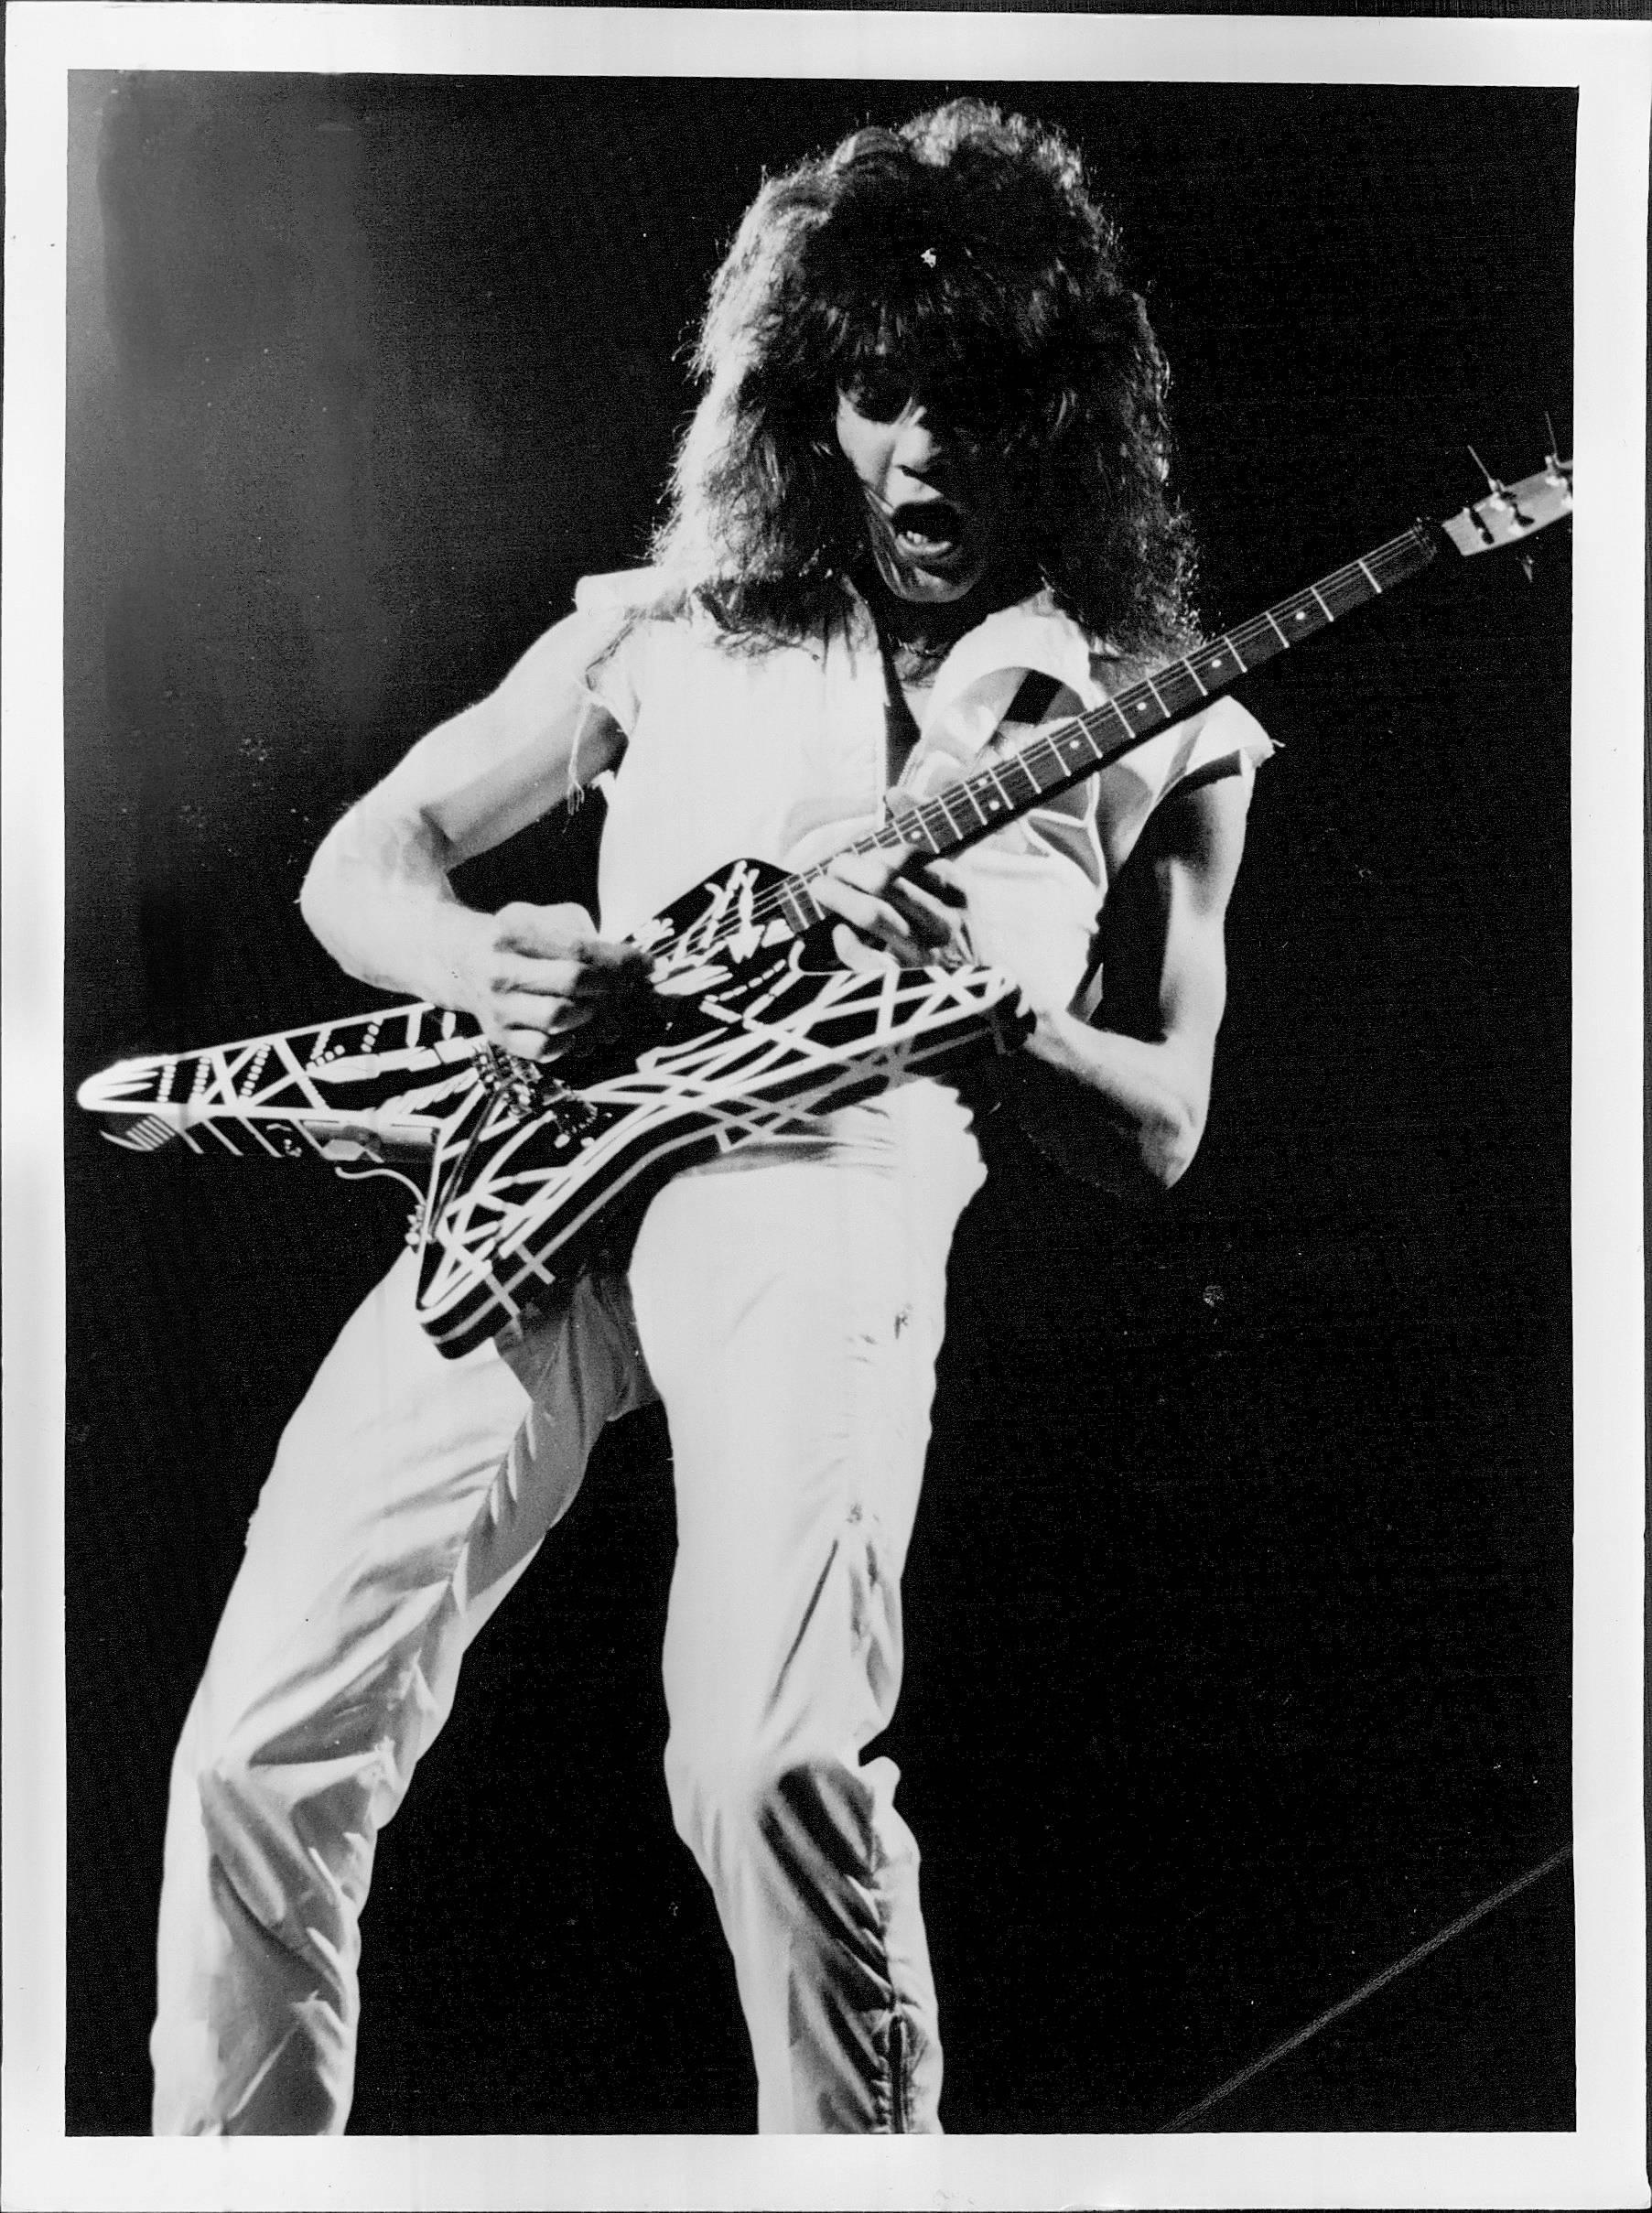 Unknown Portrait Photograph - Eddie Van Halen Shredding on Guitar Vintage Original Photograph